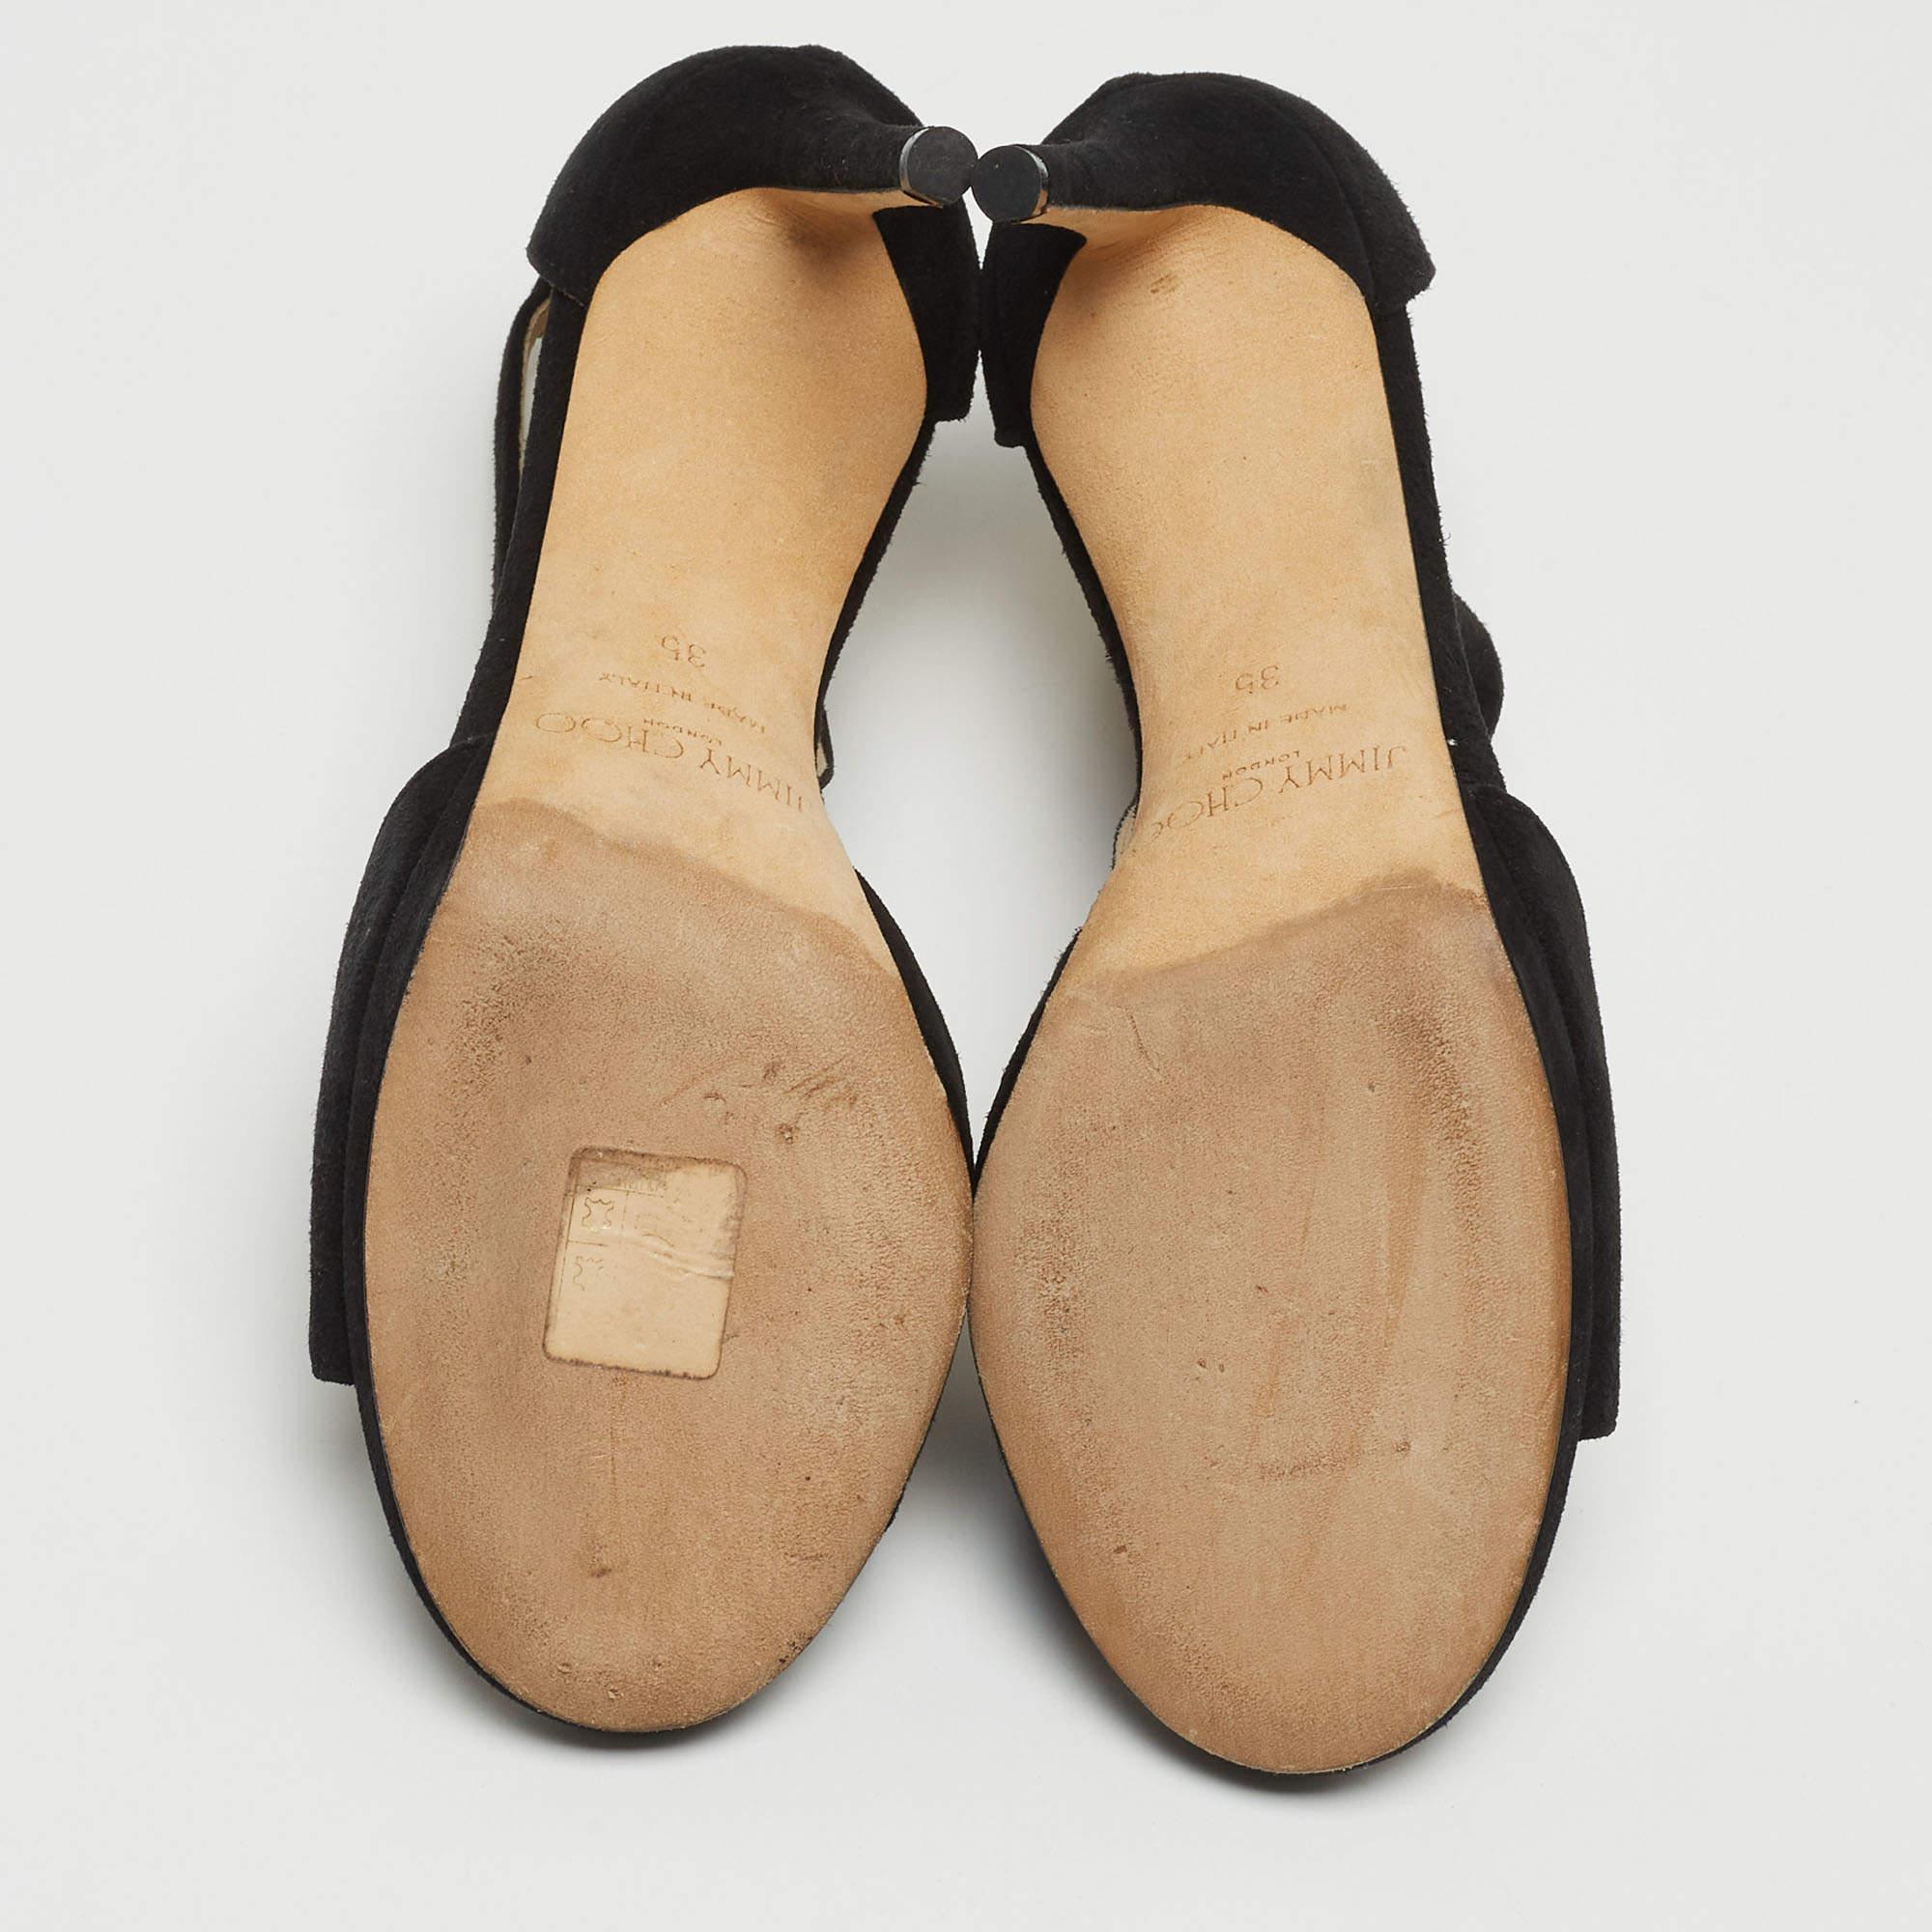 Jimmy Choo Black Suede Lana Sandals Size 35 For Sale 4